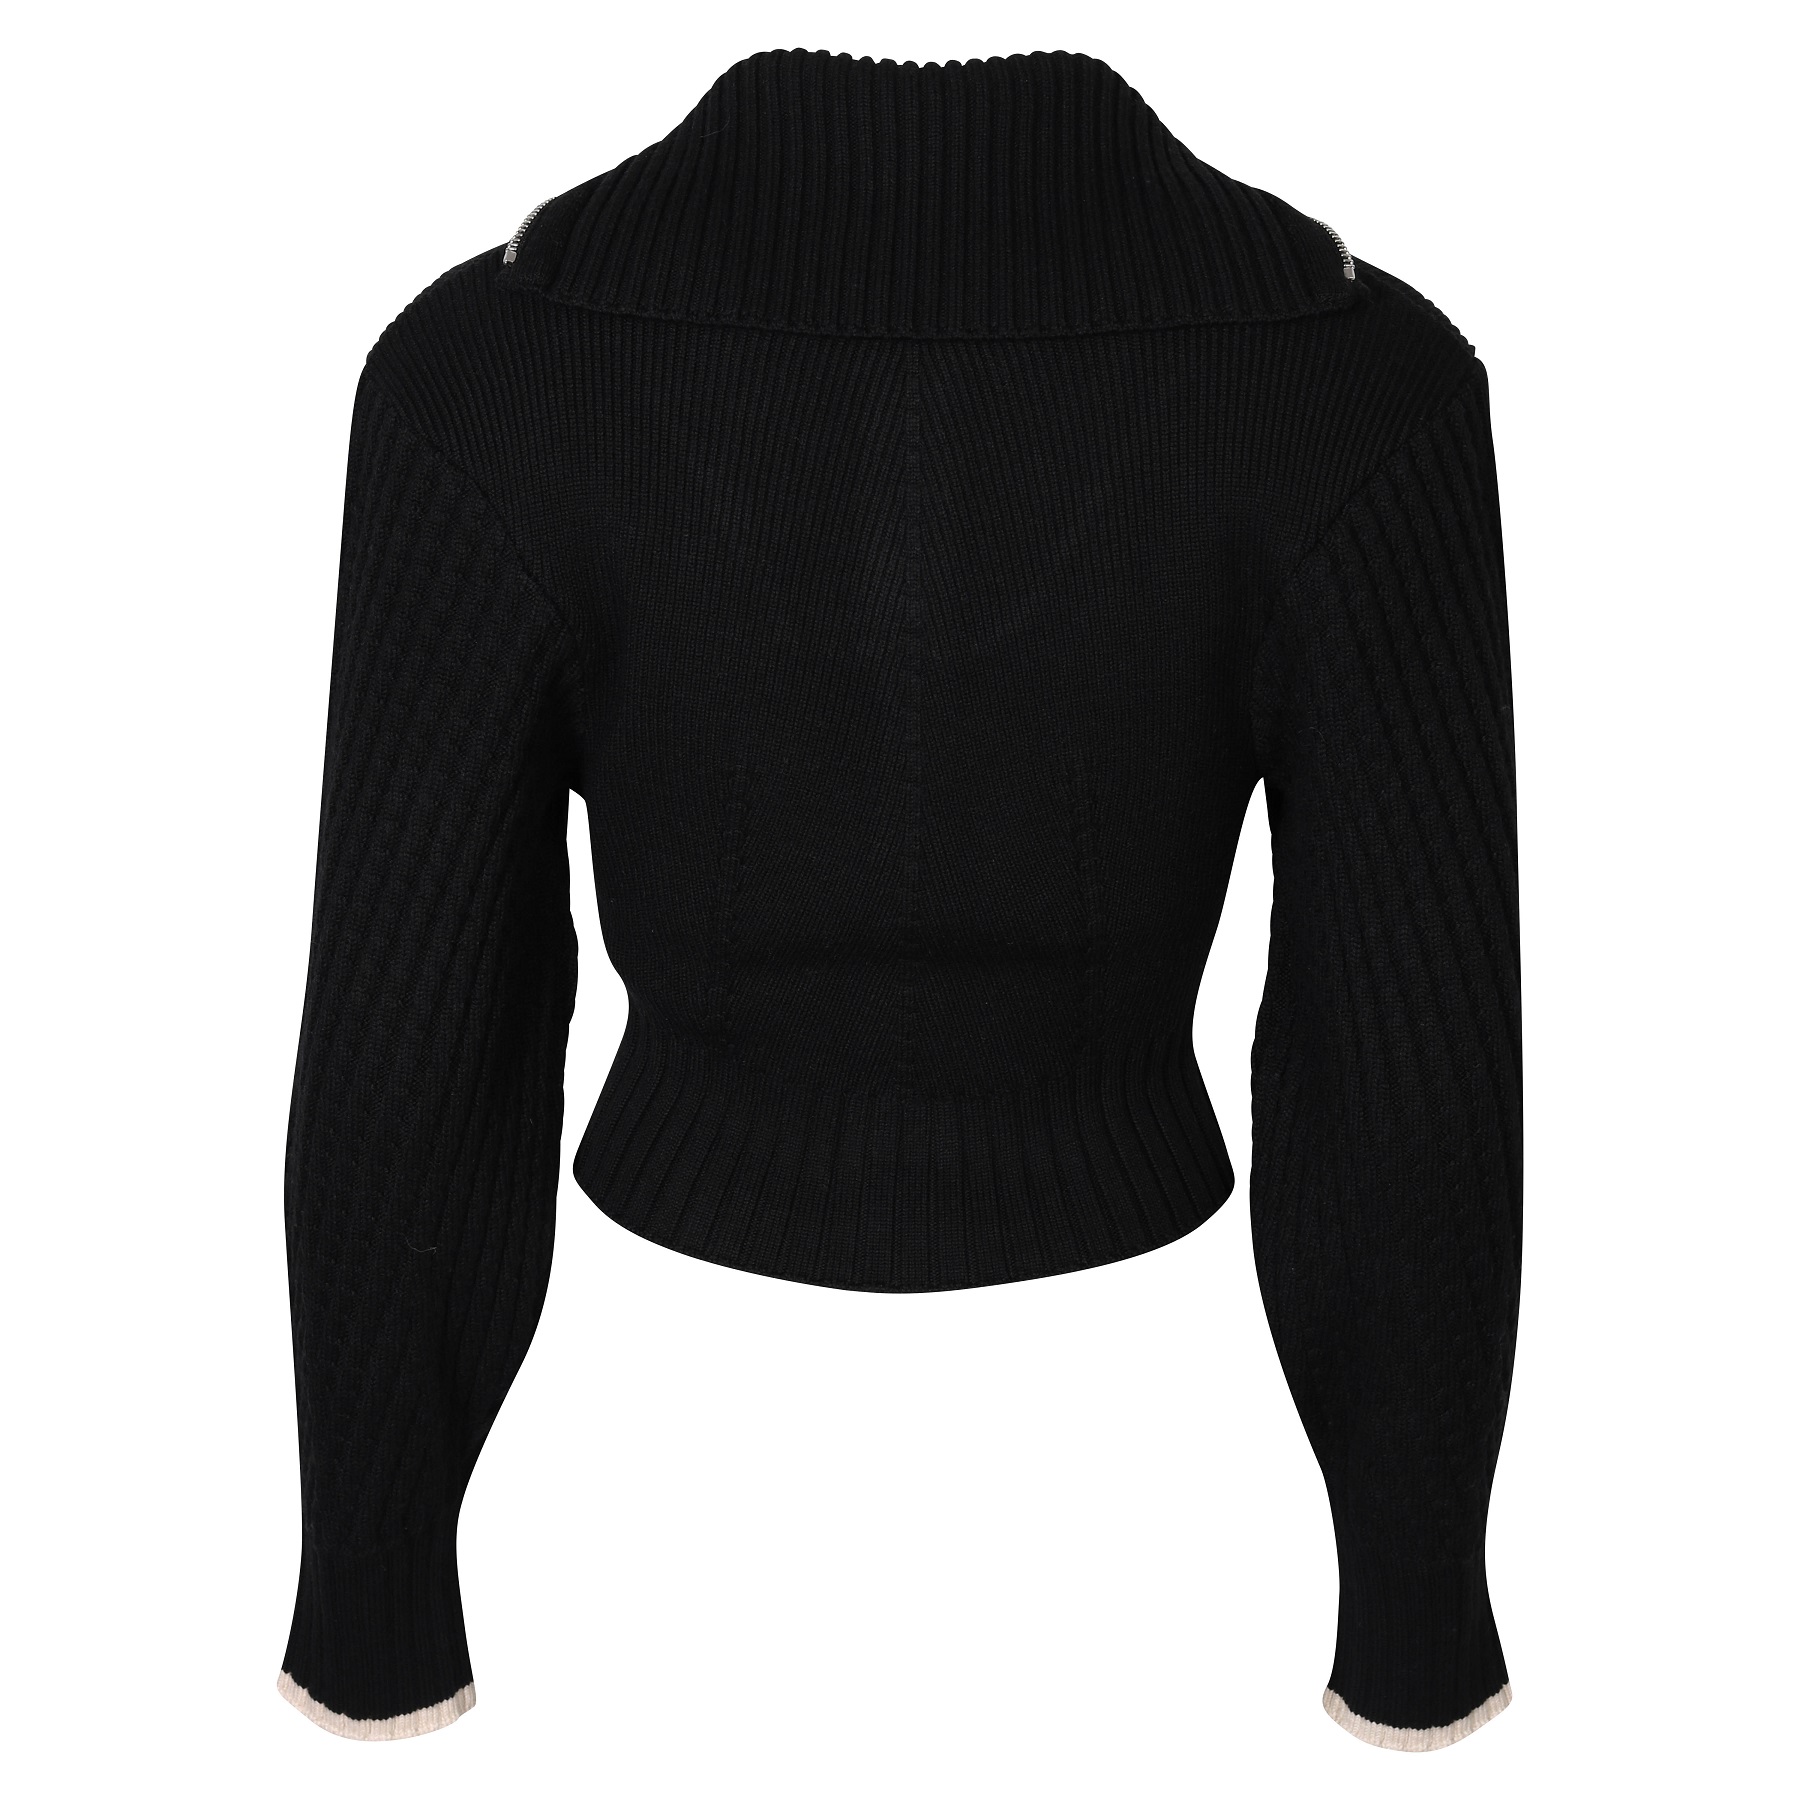 SOCIÉTÉ ANGELIQUE Merino Knit Zip Jacket with Big Shoulder 38